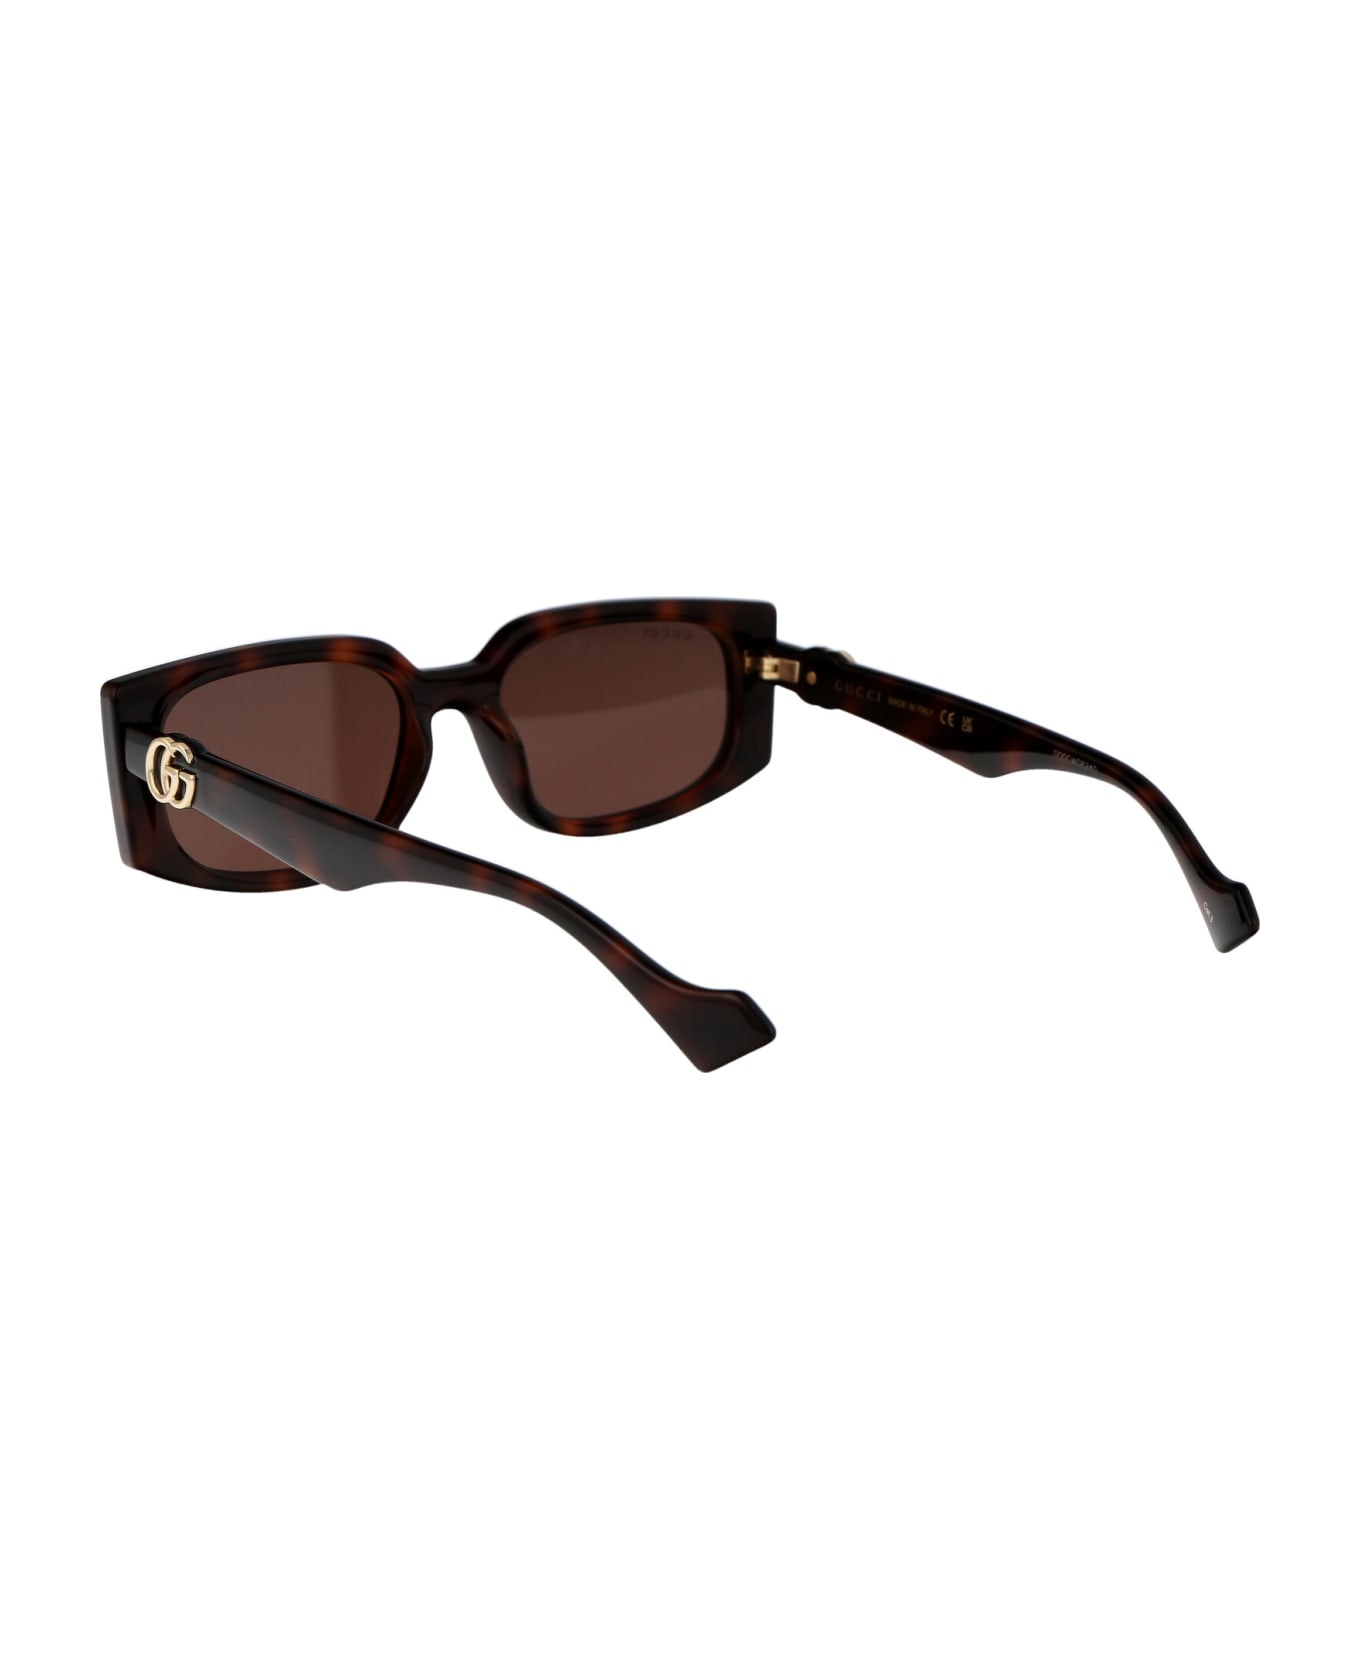 Gucci Eyewear Gg1534s Sunglasses - 002 HAVANA HAVANA BROWN